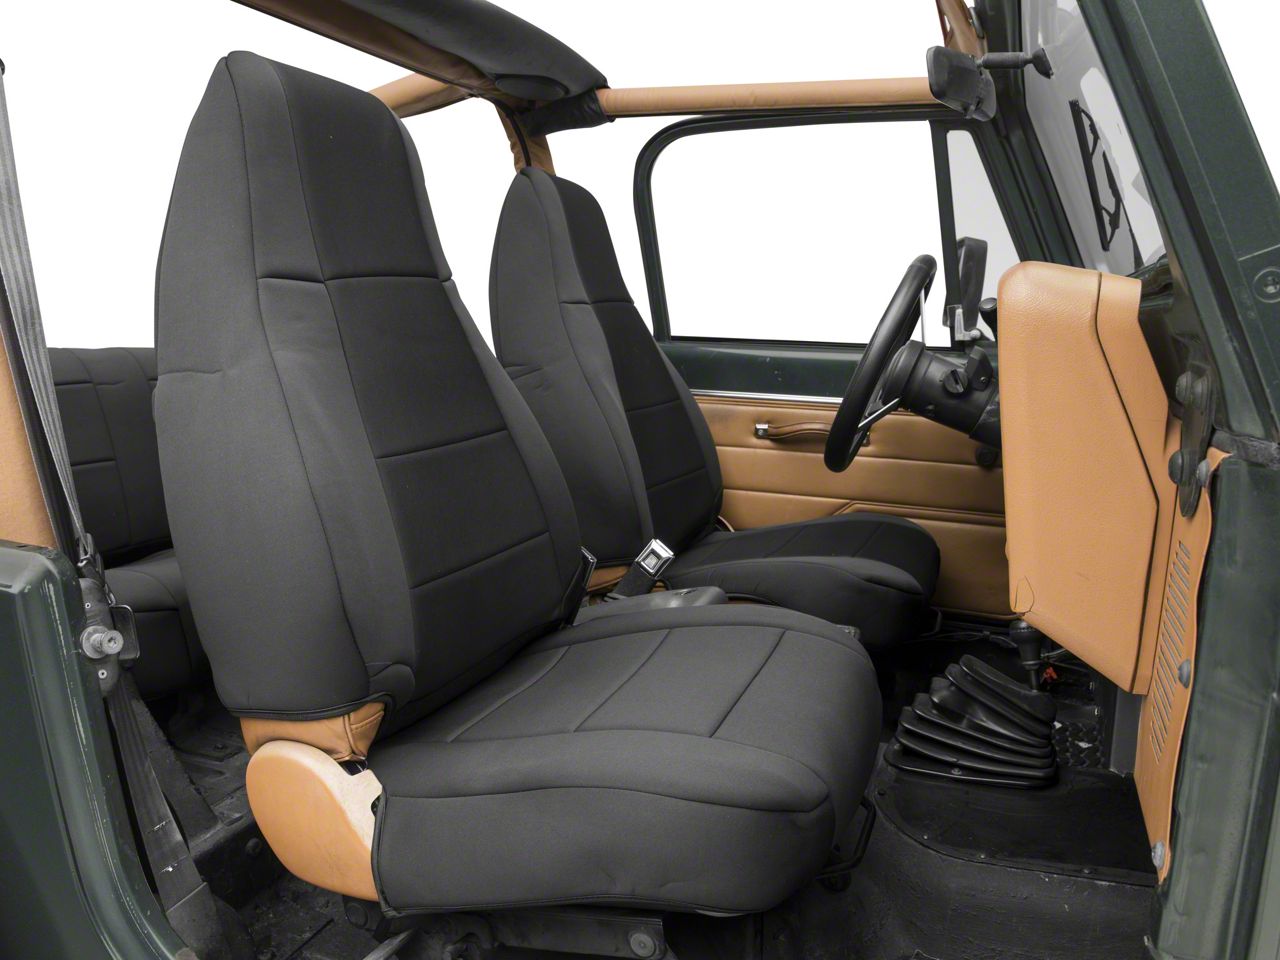 Smittybilt Jeep Wrangler Neoprene Seat Cover Set Front Rear Black J103850 87 95 Yj - 1988 Jeep Wrangler Yj Seat Covers